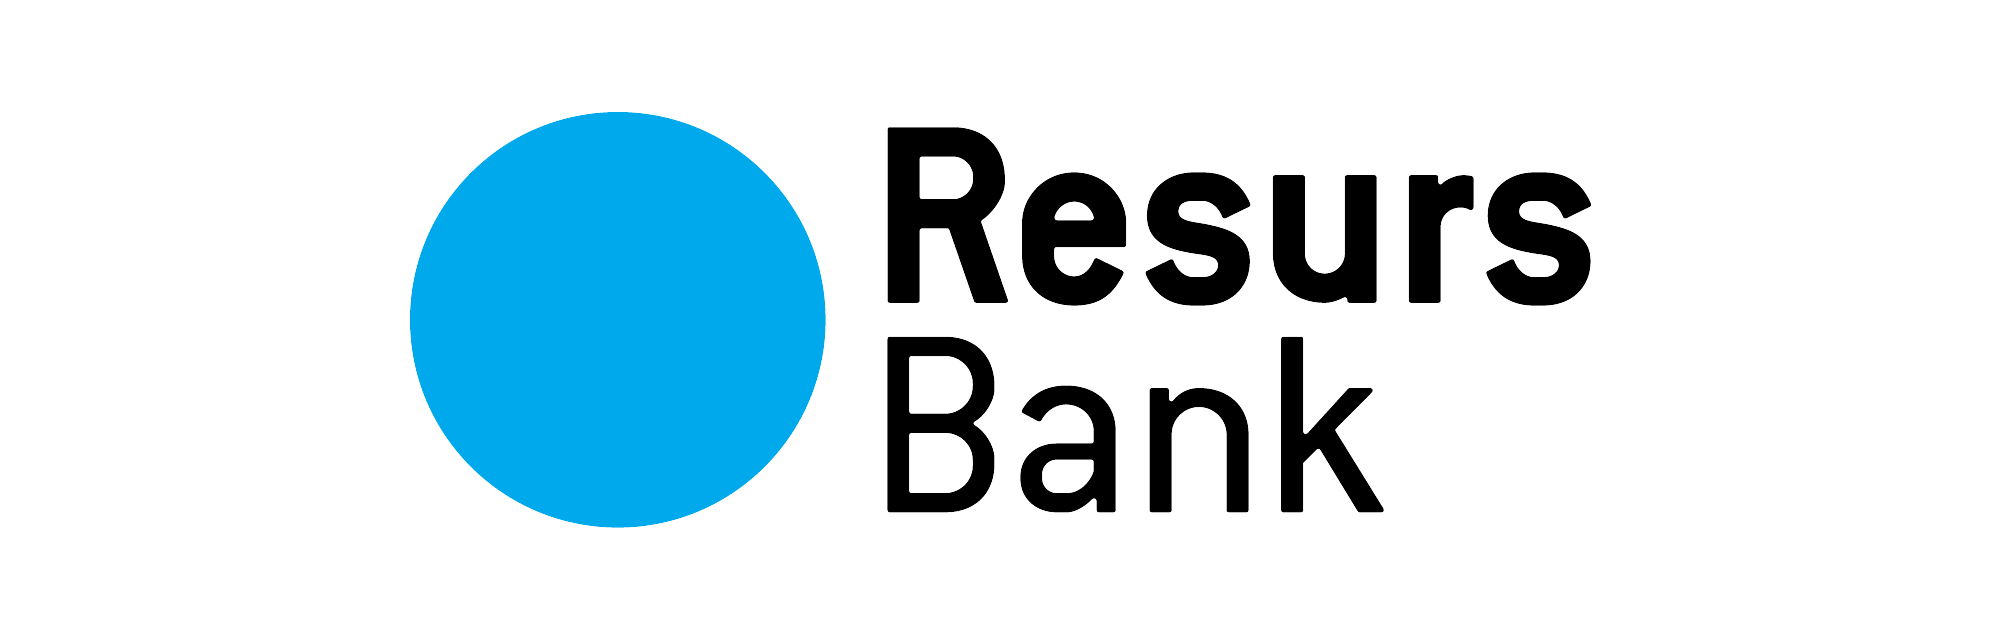 resur bank